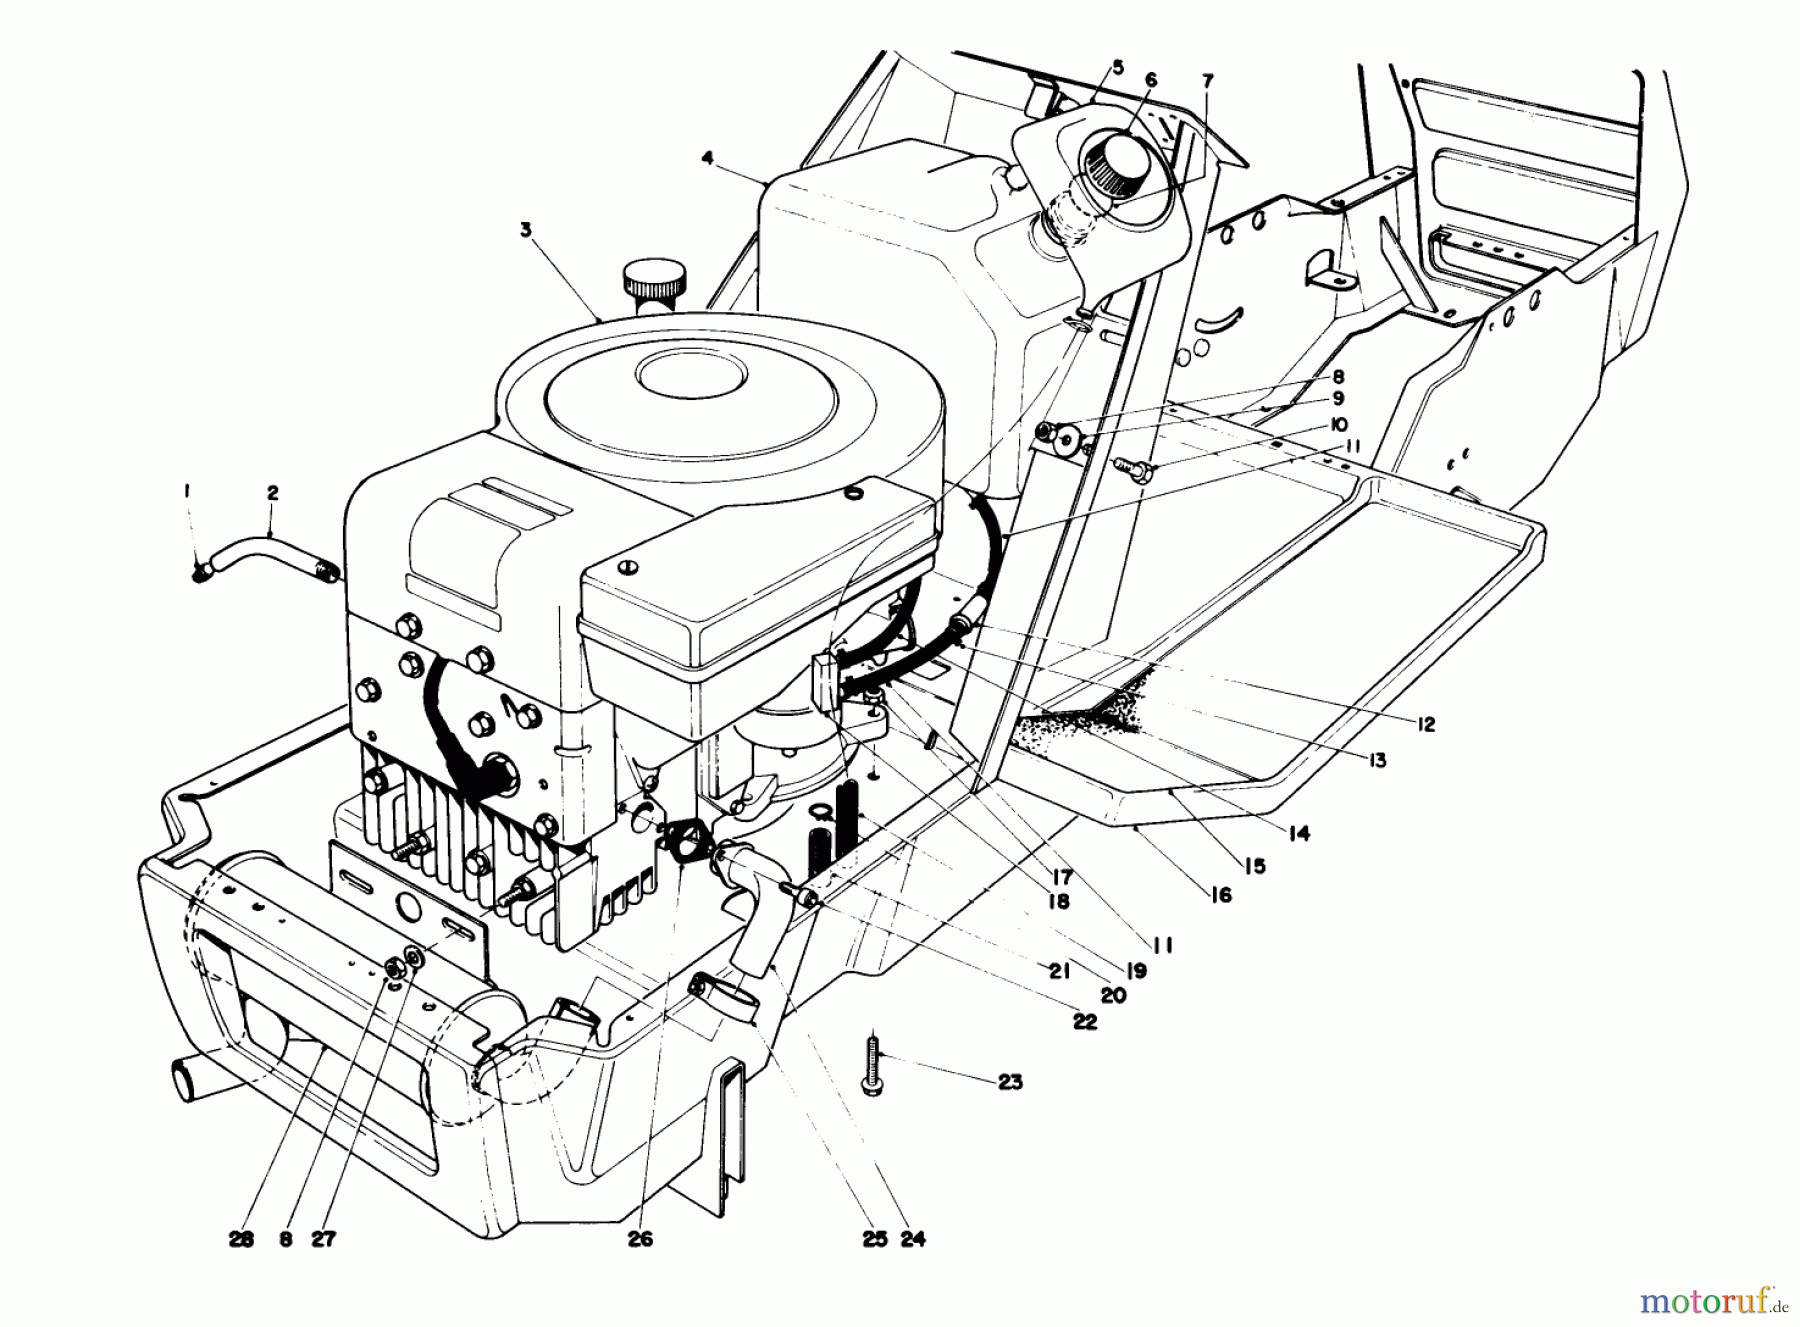  Toro Neu Mowers, Lawn & Garden Tractor Seite 1 57300 (8-32) - Toro 8-32 Front Engine Rider, 1978 (8000001-8999999) ENGINE ASSEMBLY MODEL 57360